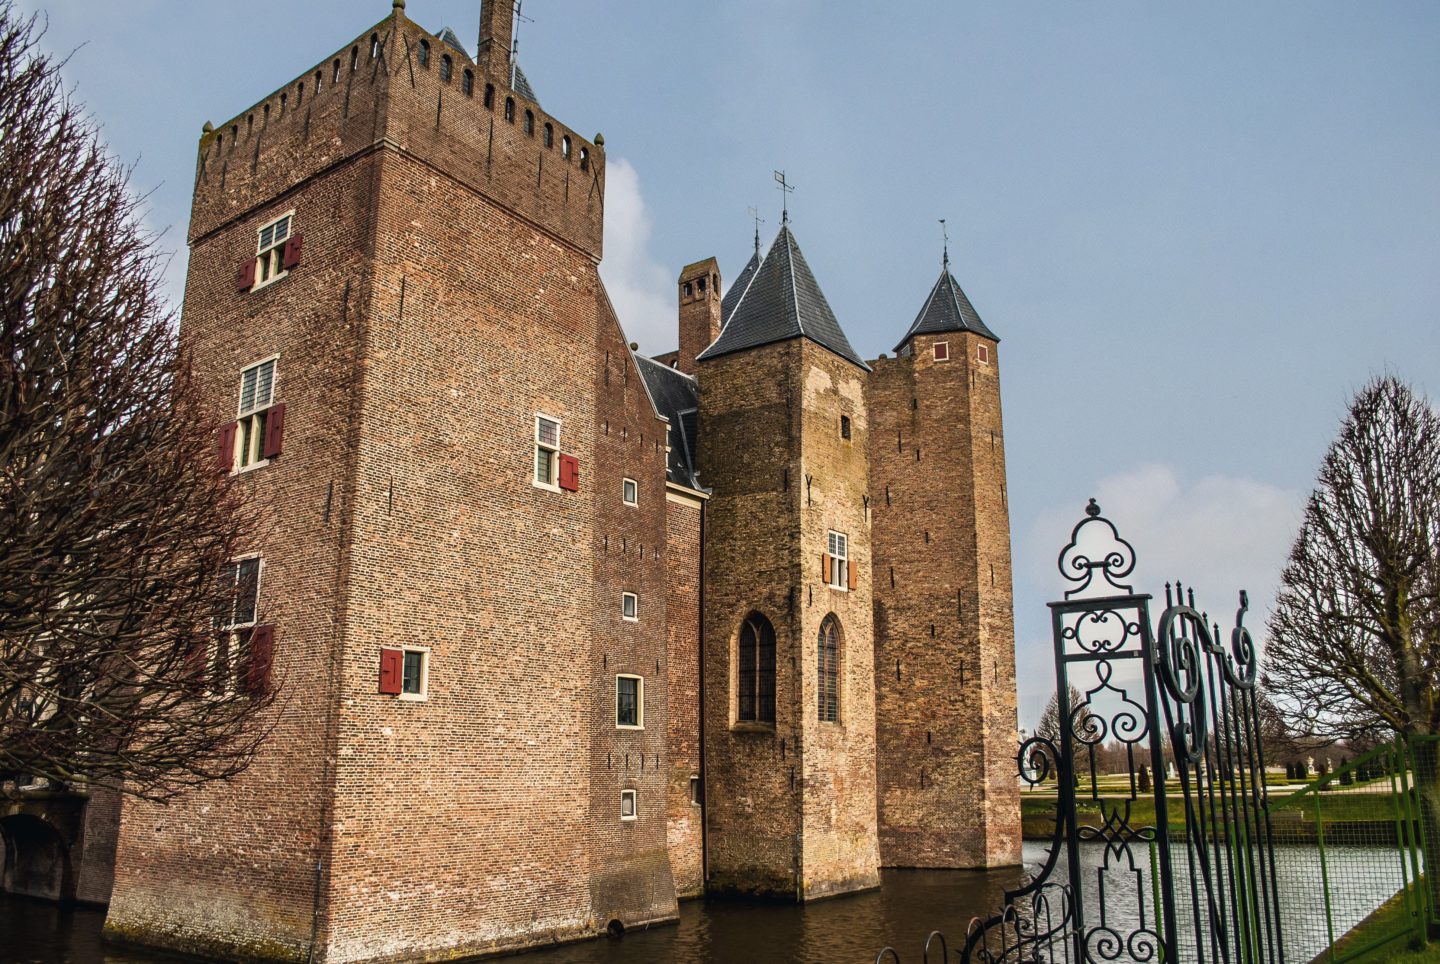 The impressive Assumburg Castle and moat in Heemskerk, the Netherlands.